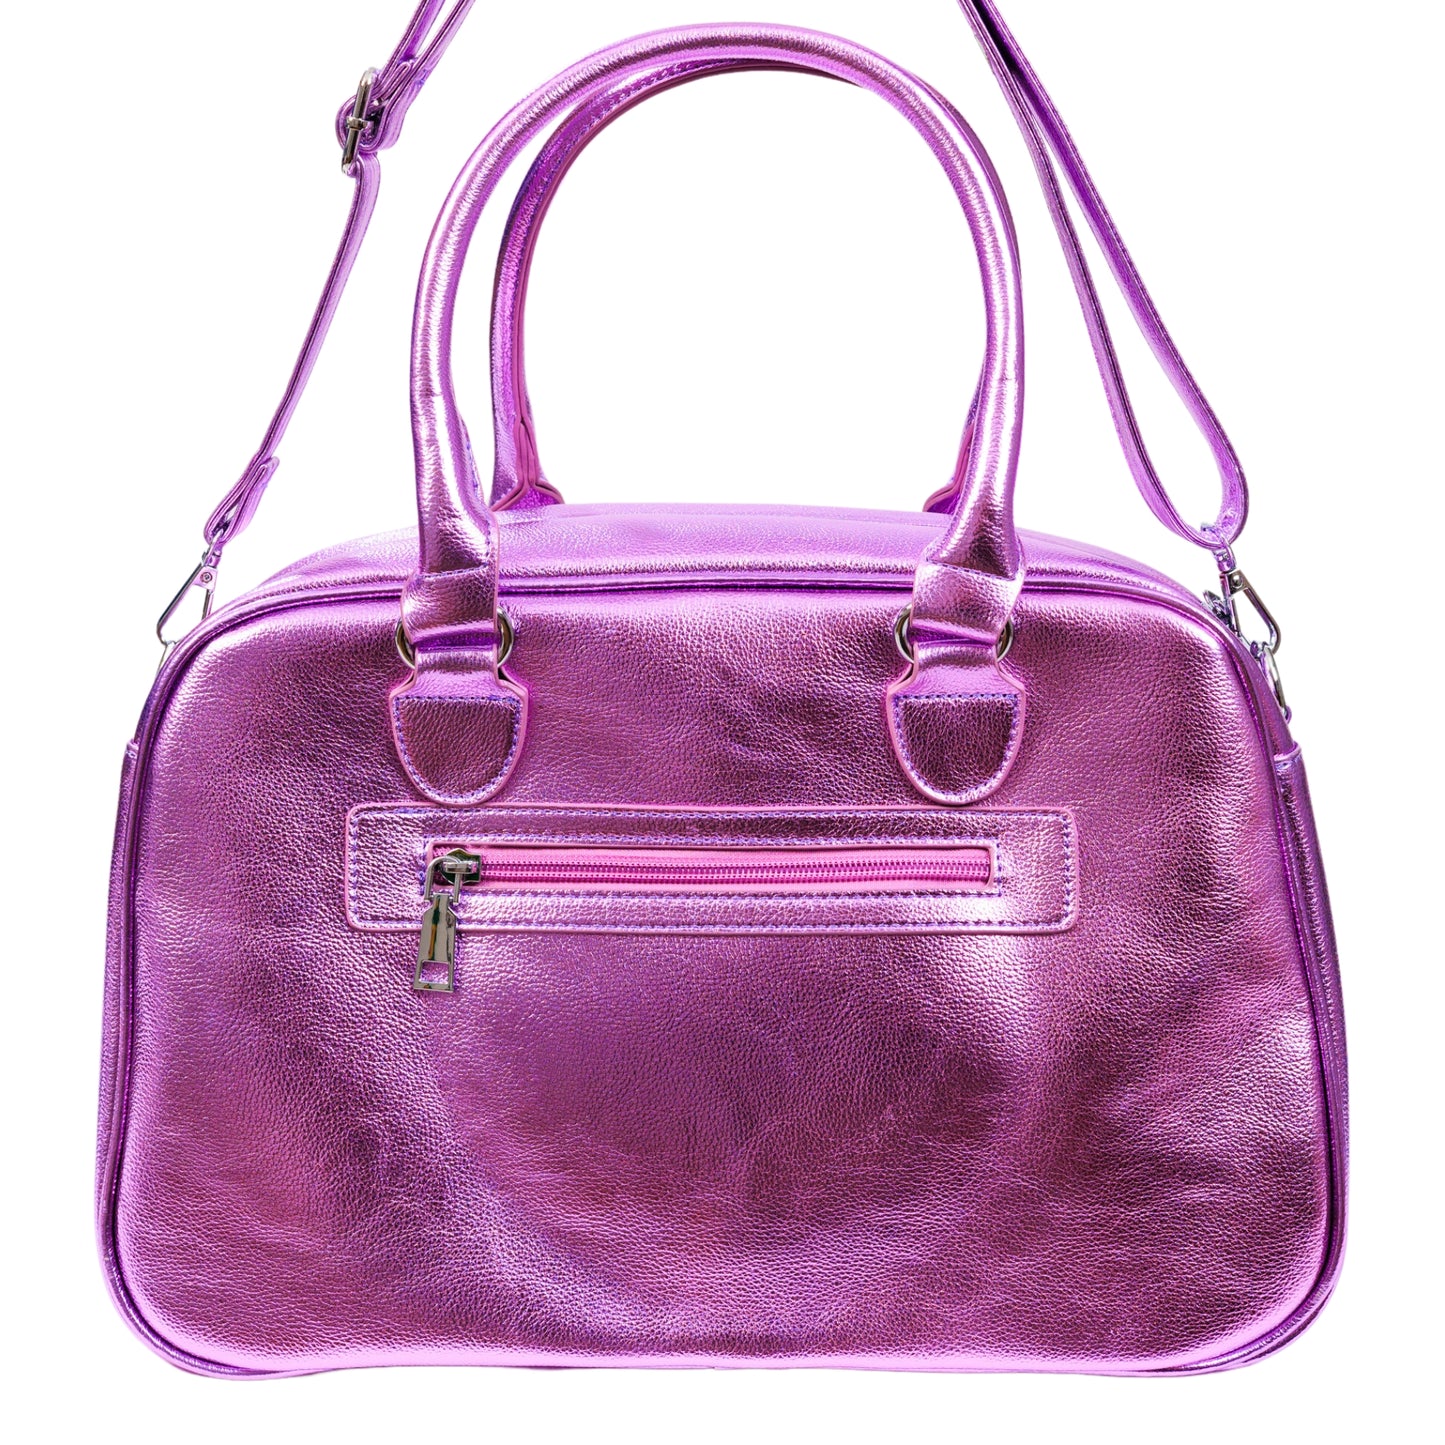 Amethyst Bowler Bag by RainbowsAndFairies.com (Purple Glitter - Sparkle - Lilac - Kitsch - Bowler Style - Bowling Bag - Handbag - Vintage Inspired - Rockabilly) - SKU: BG_BOWLR_AMTHS_ORG - Pic 04